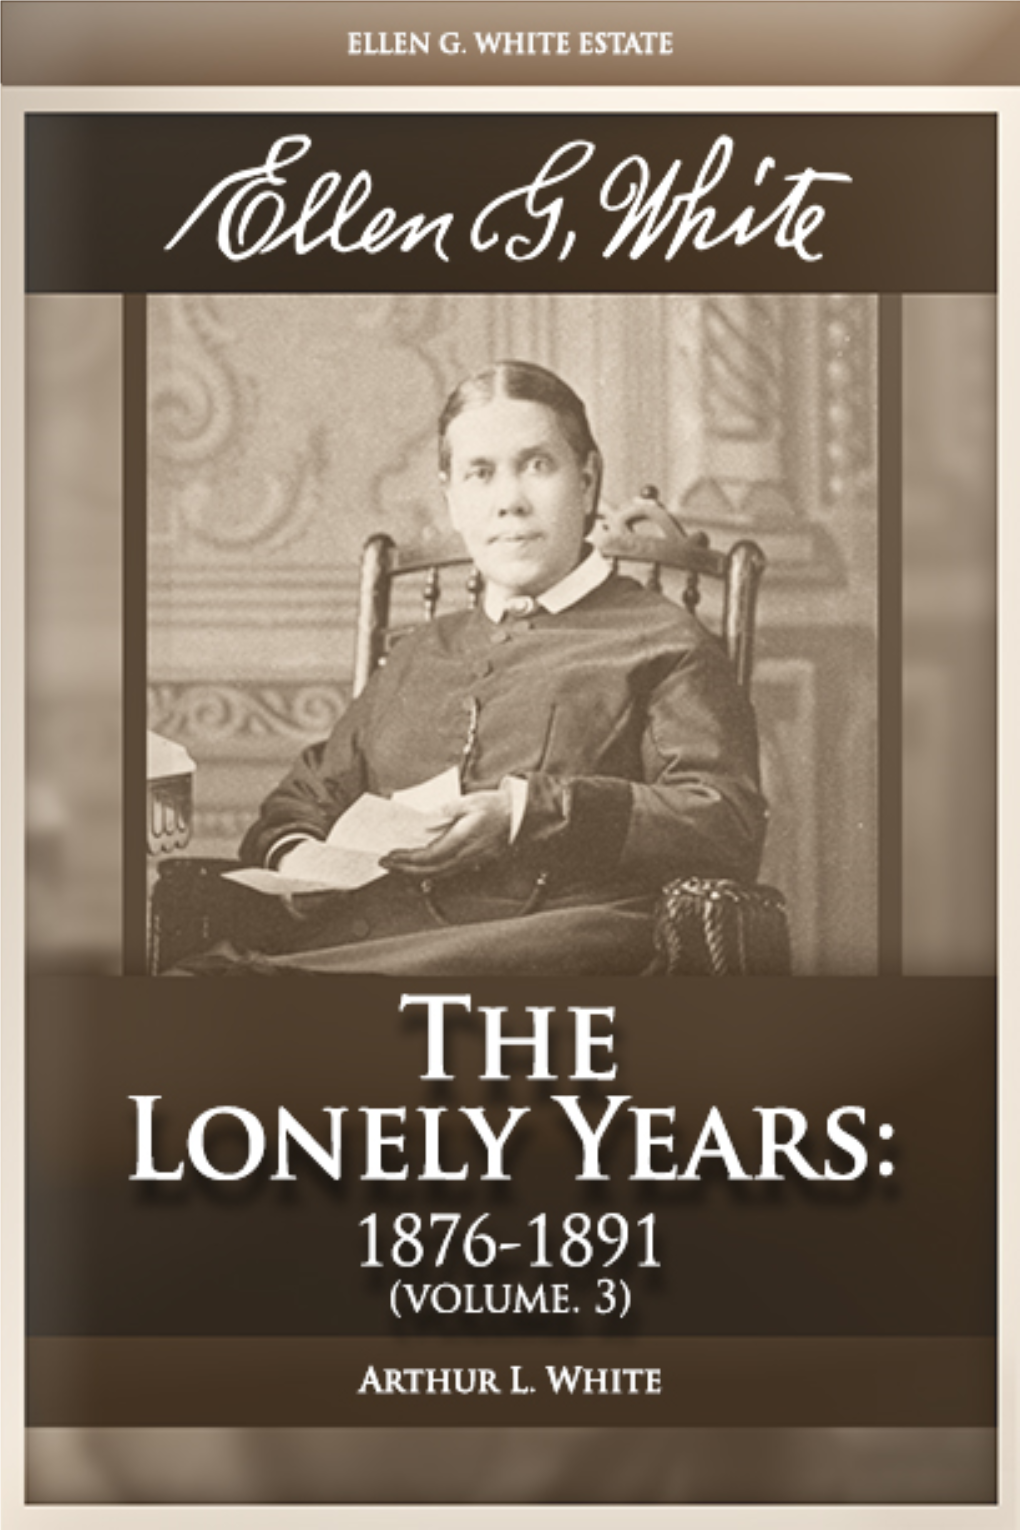 Ellen G. White: Volume 3—The Lonely Years: 1876-1891